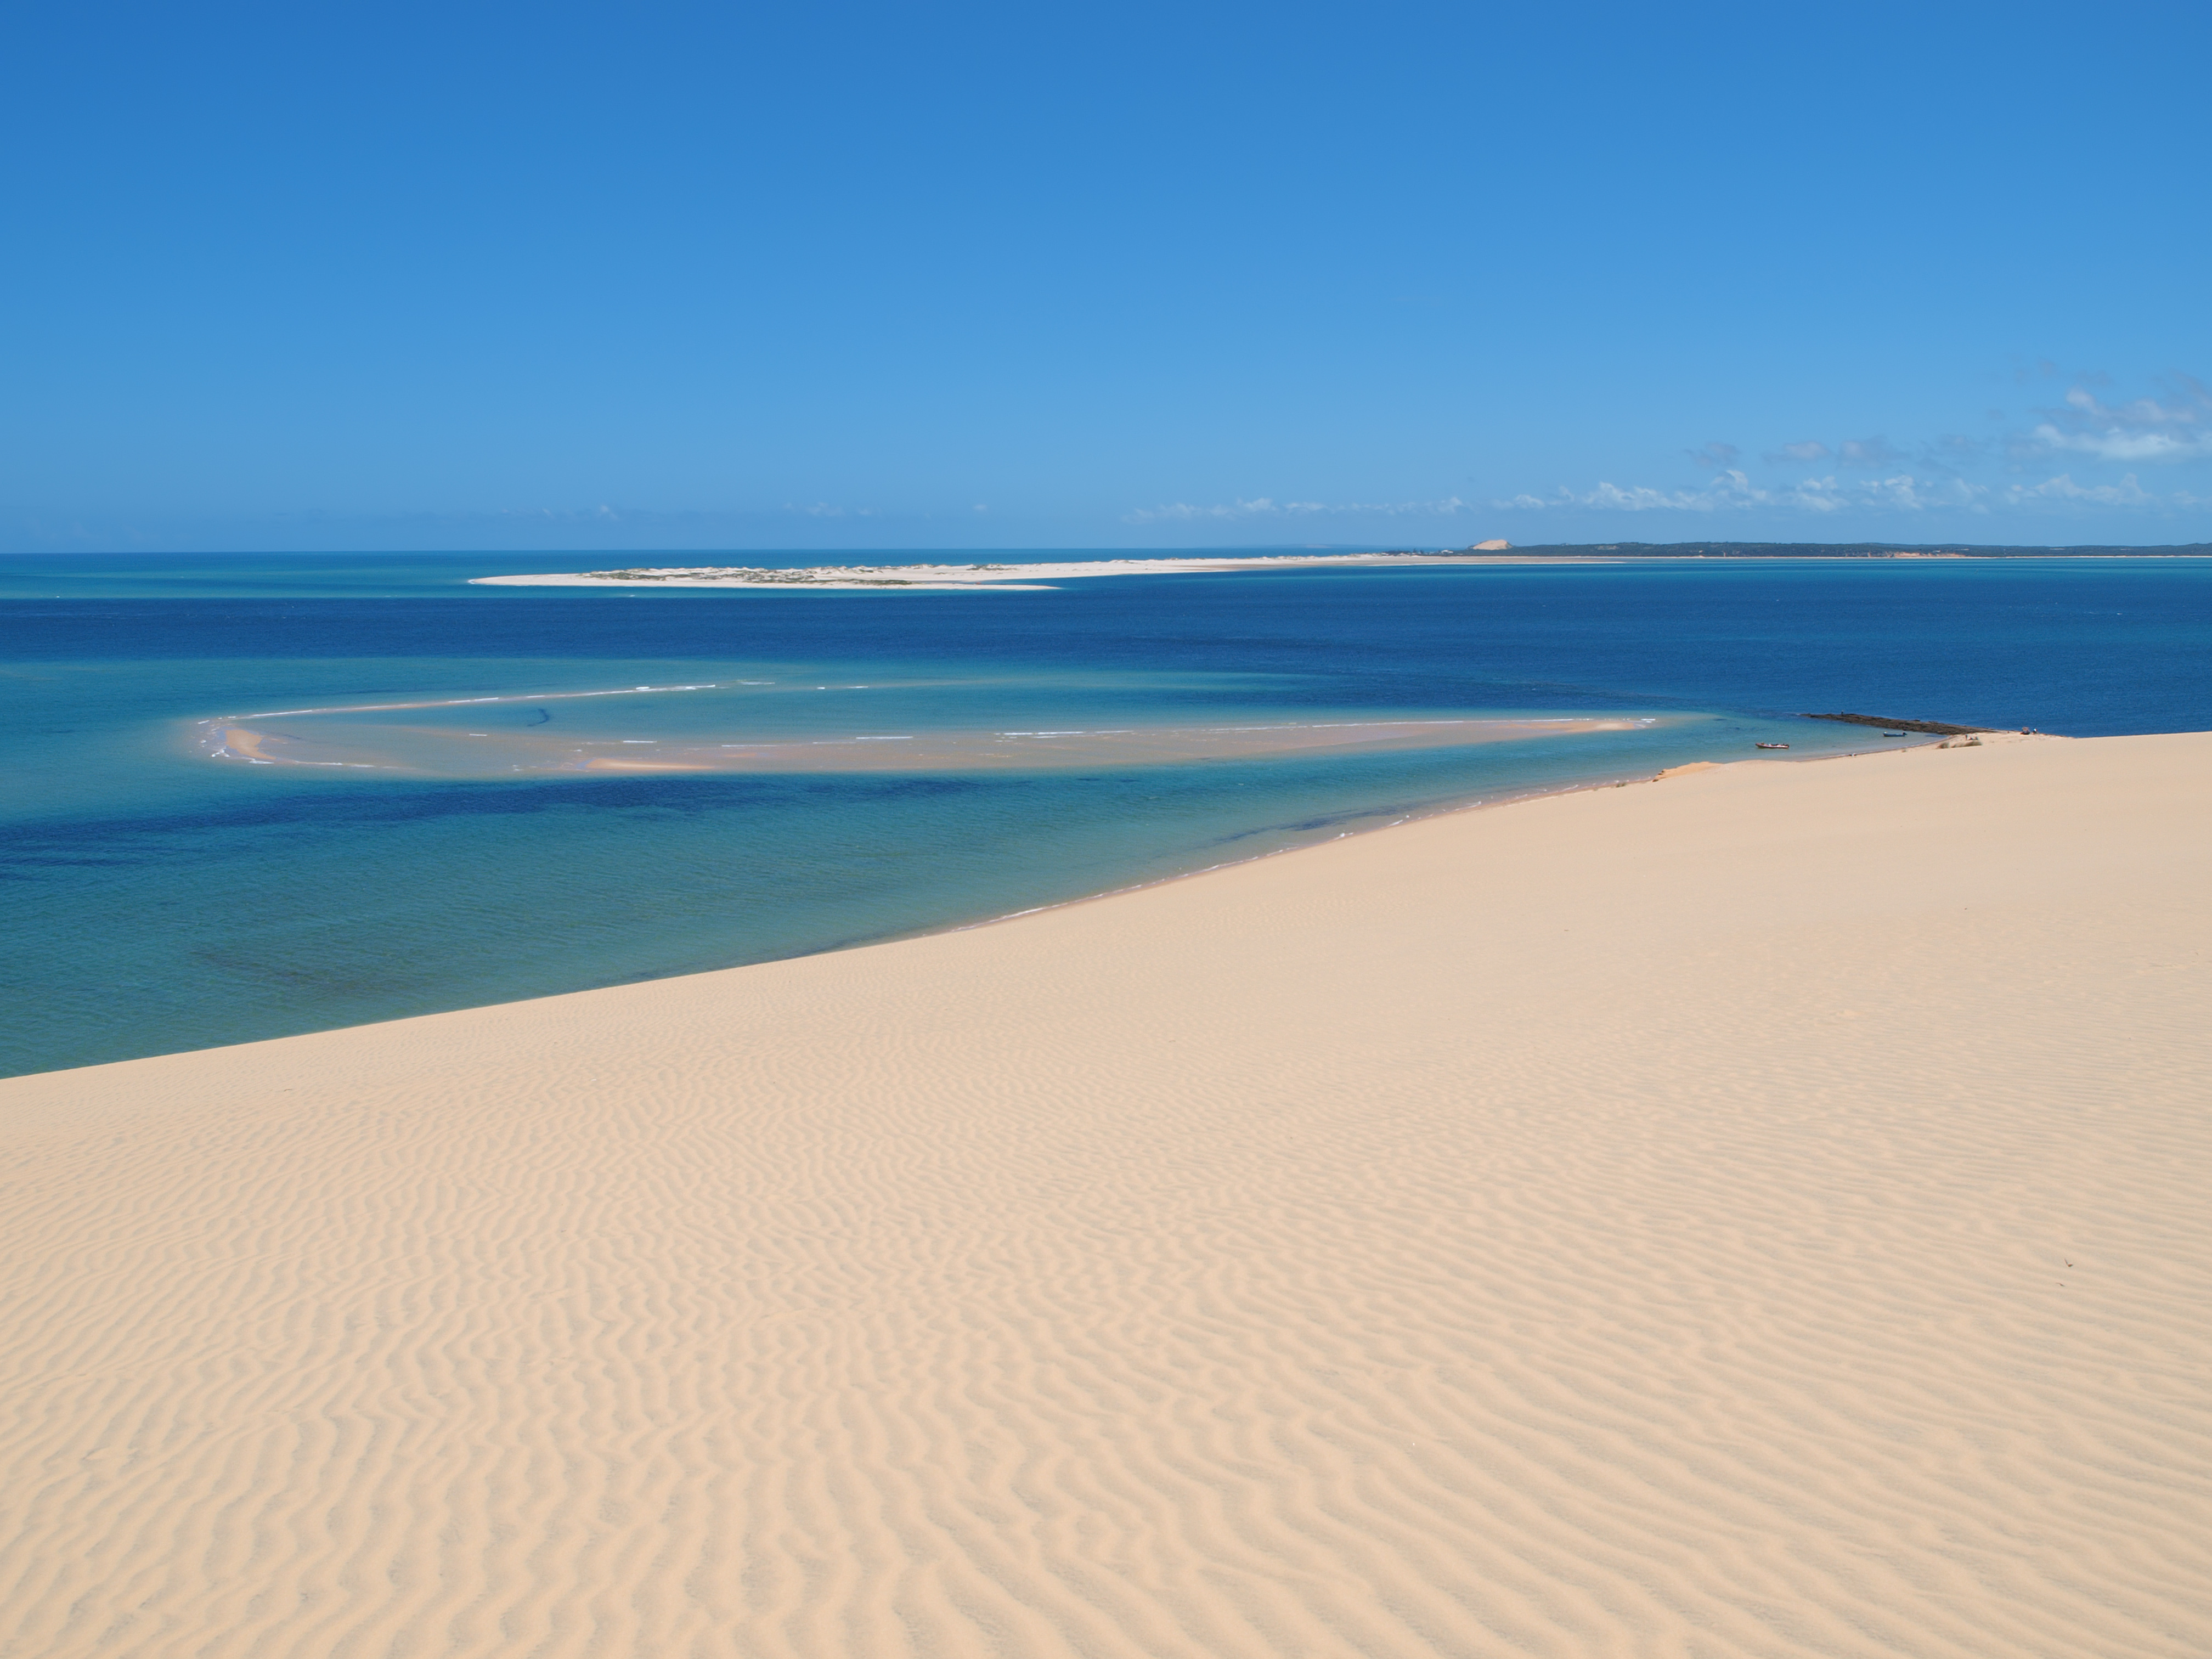 Mozambique's stunning Bazaruto Archipelago